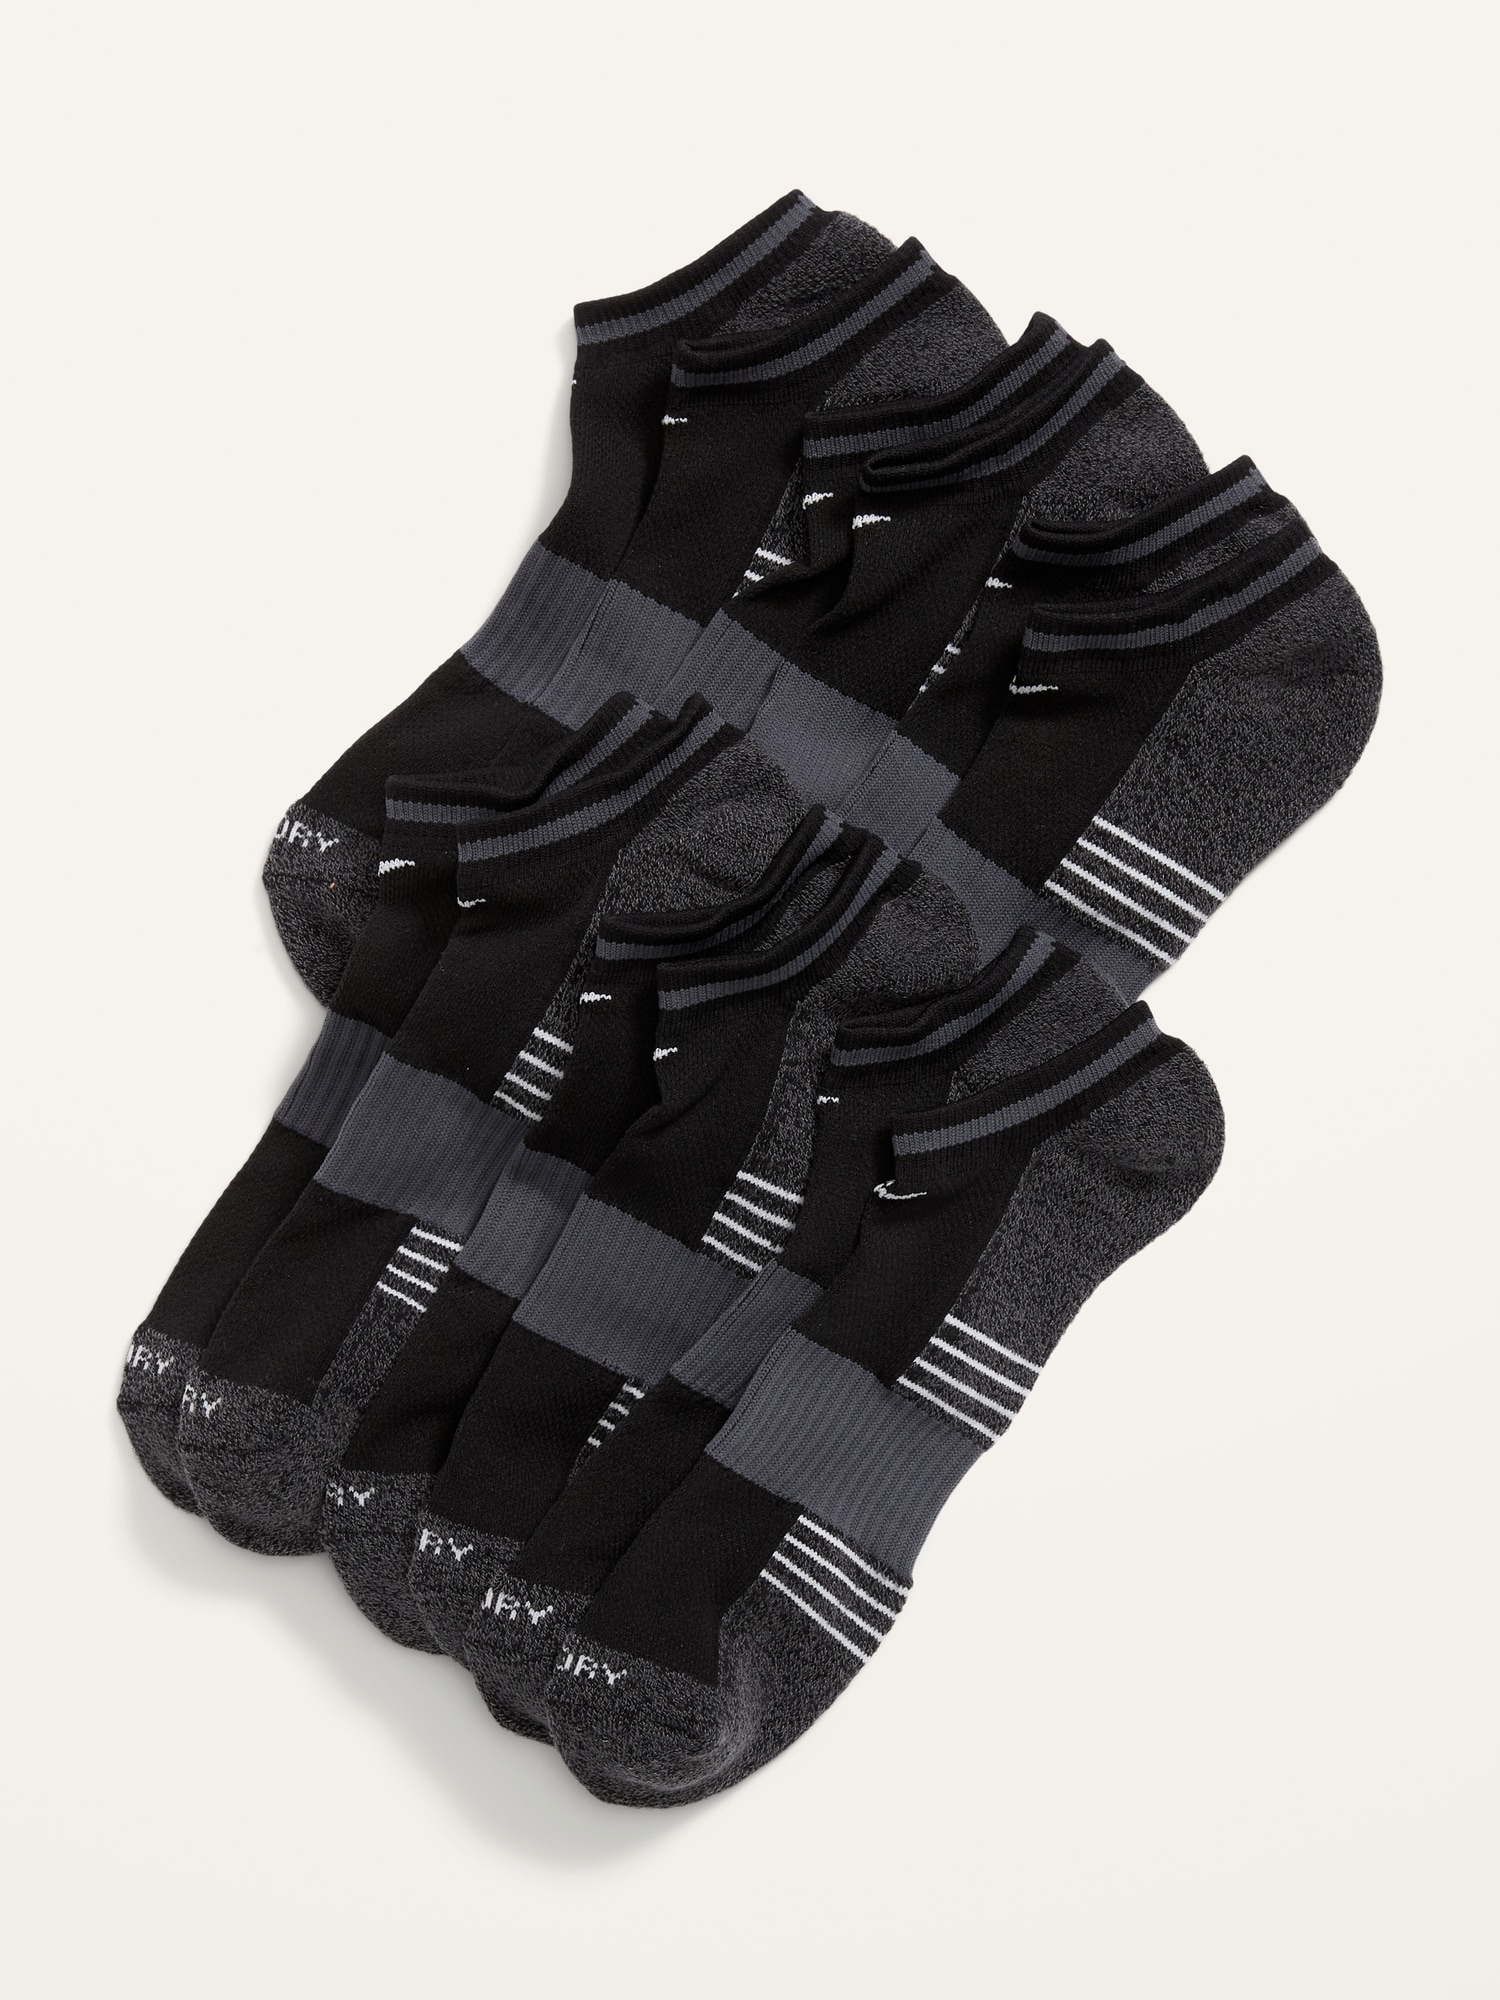 Old Navy Men's Athletic Ankle Socks - - Size S/M